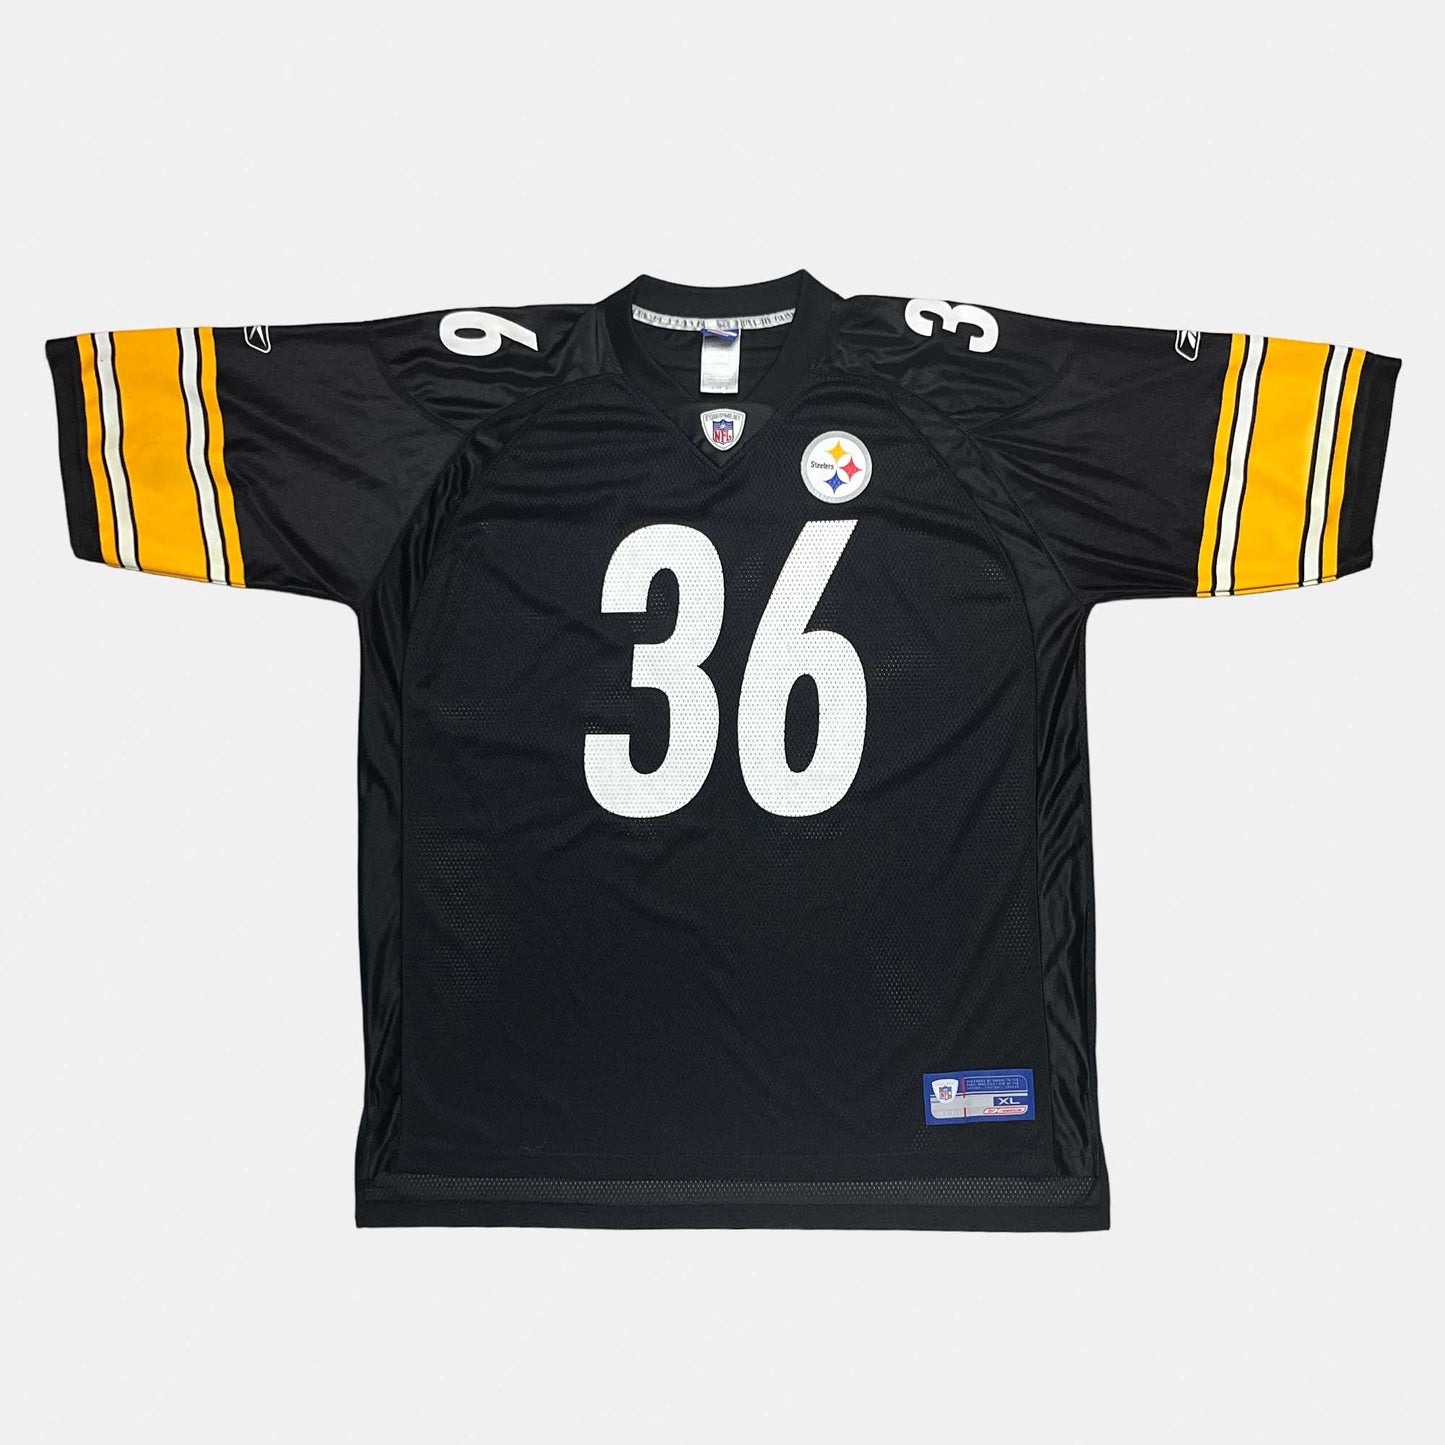 Pittsburgh Steelers - Jerome Bettis - Größe XL - Reebok - NFL Trikot